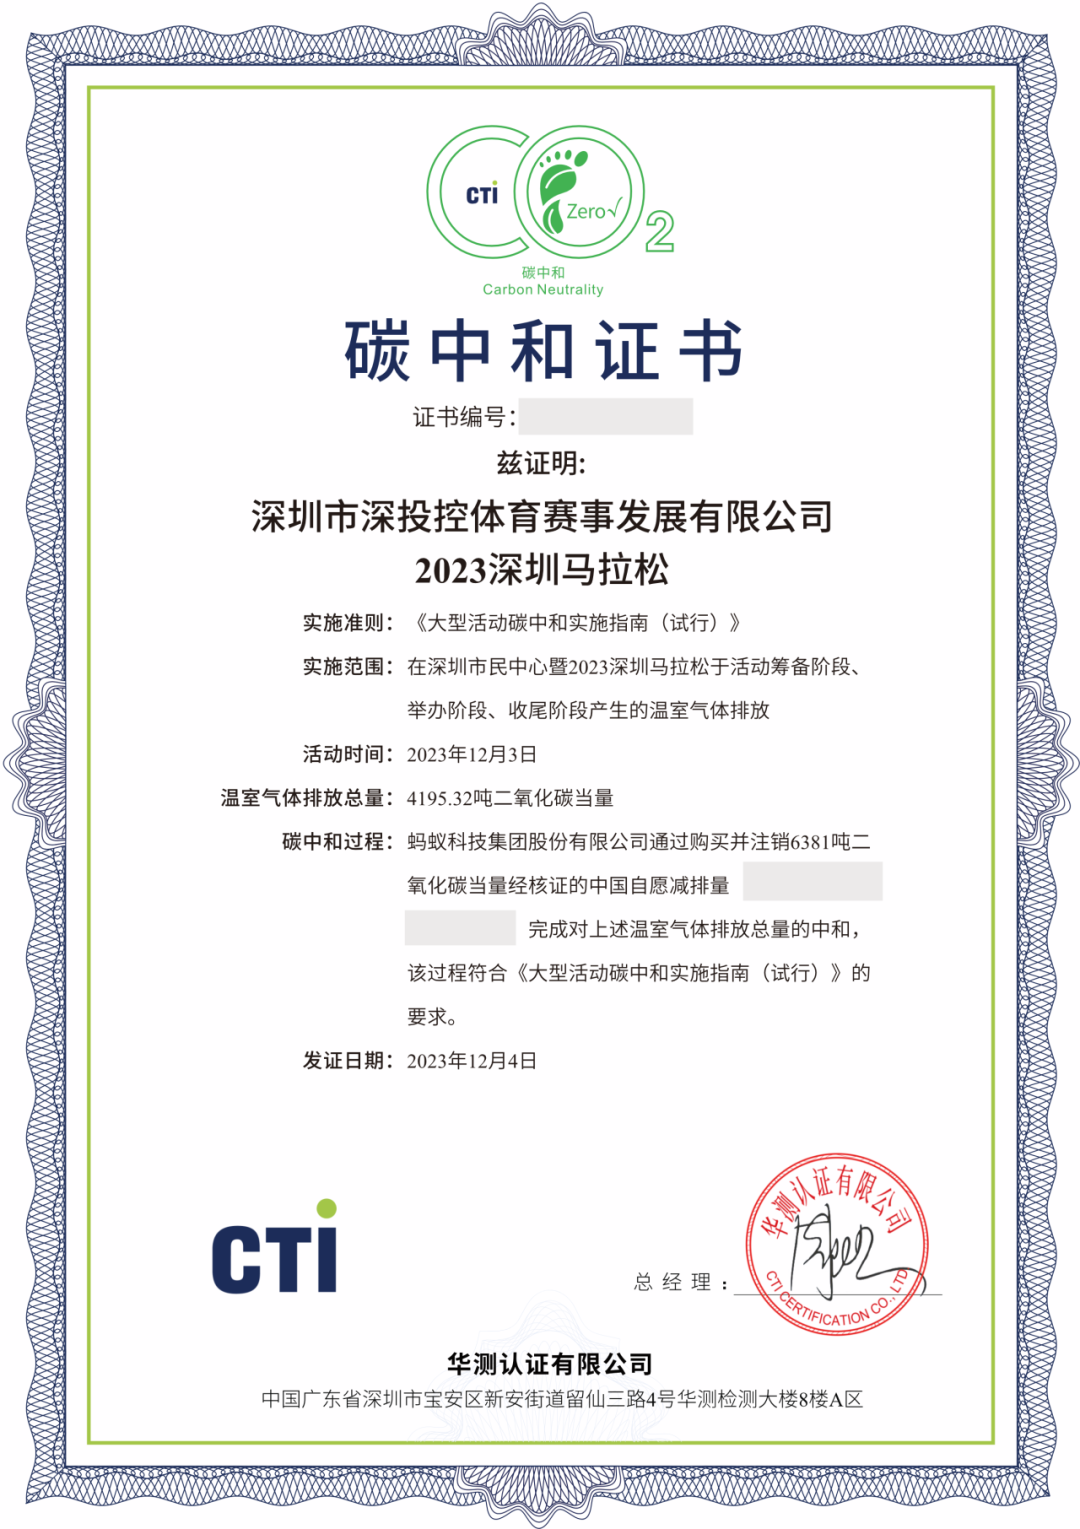 CTI Certification provided Carbon Verification and Carbon Neutral services for Shenzhen Marathon 2023